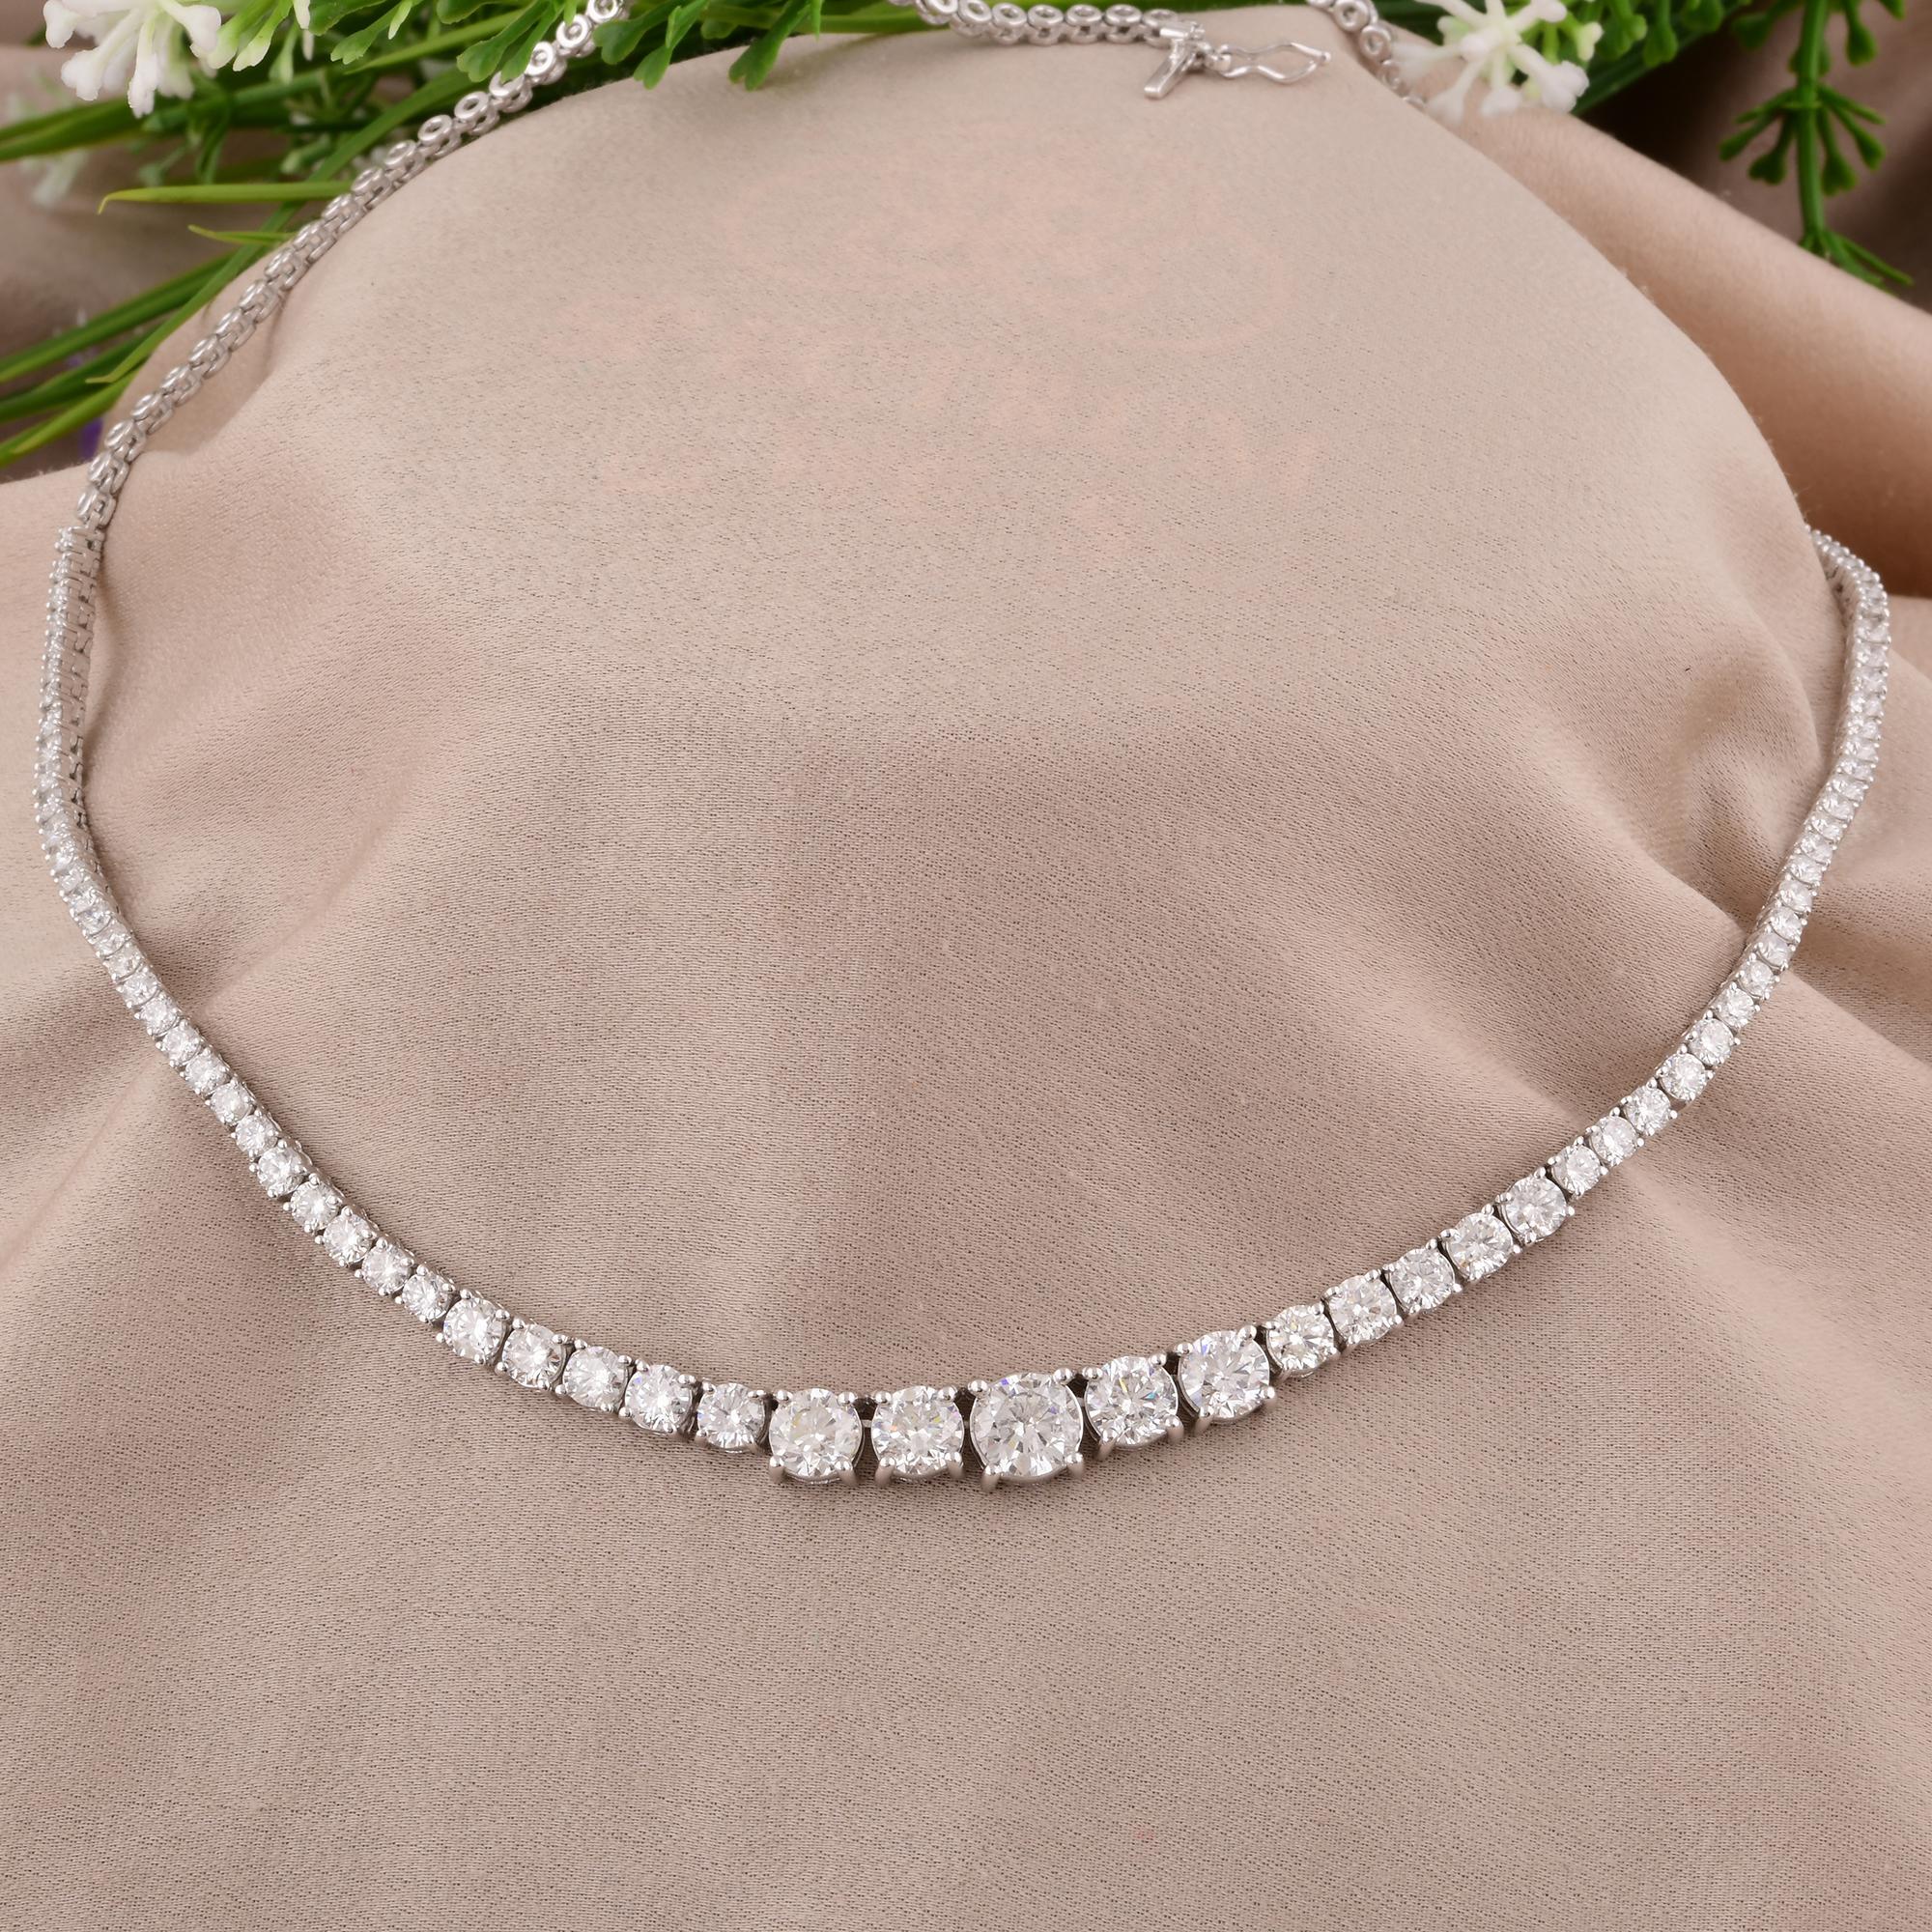 Modern Natural 7.17 Carat Round Diamond Necklace 18 Karat White Gold Handmade Jewelry For Sale